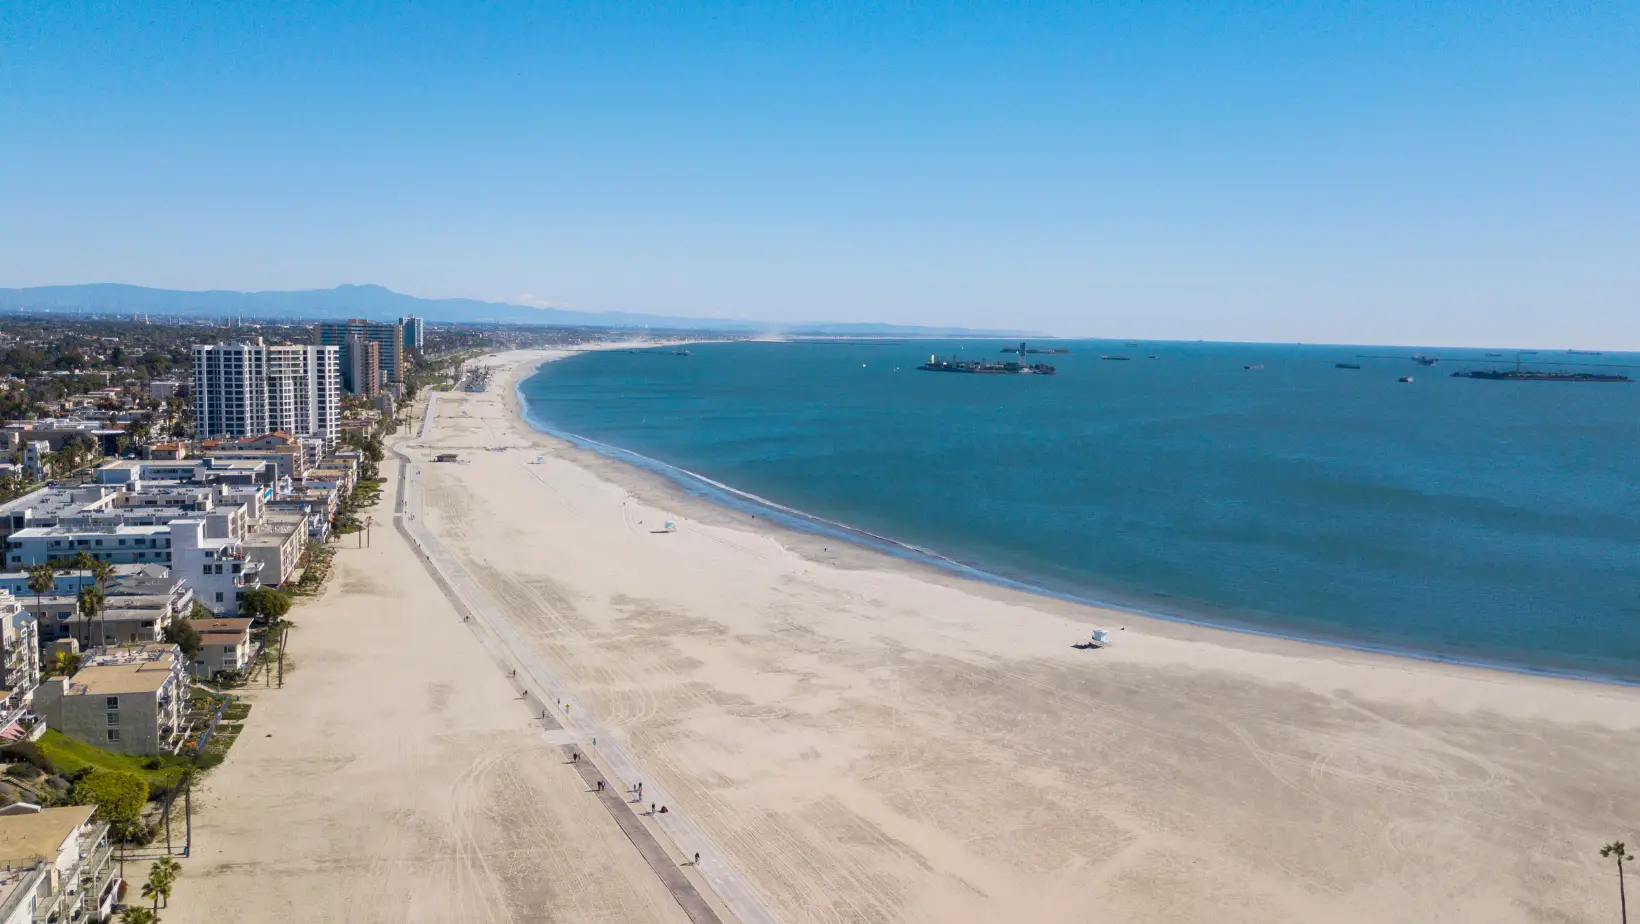 Coastline view of Long Beach, California